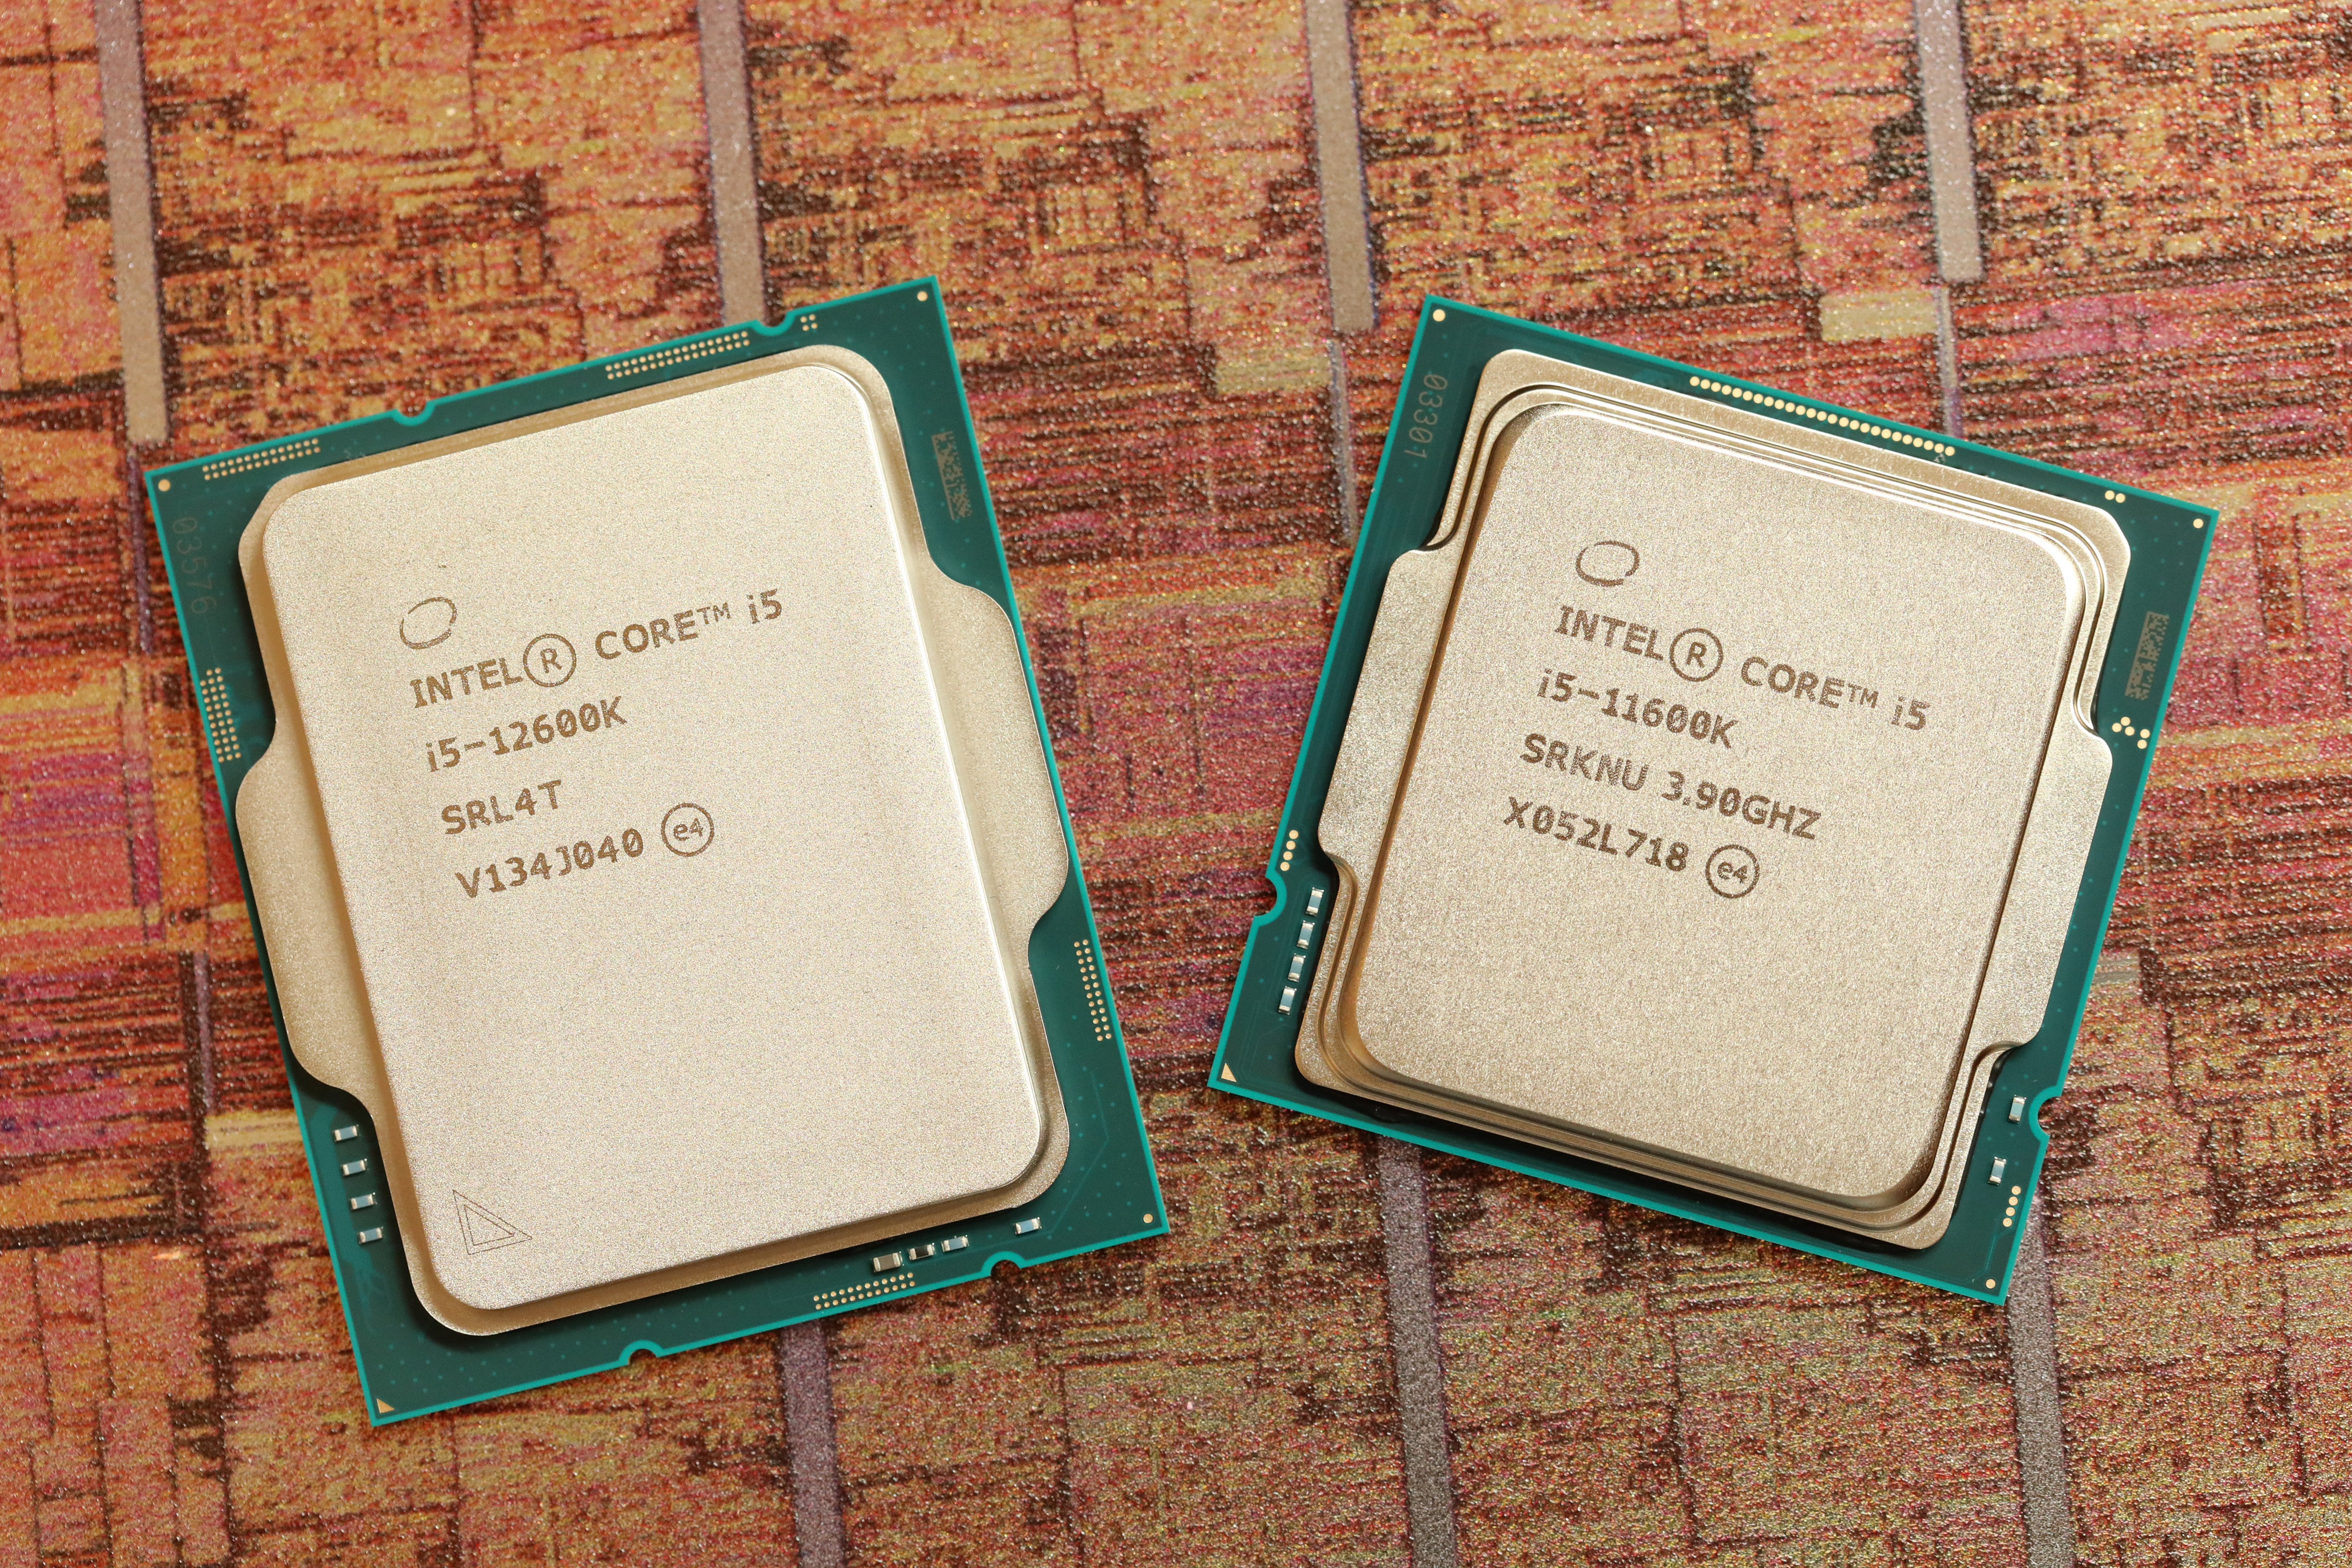 Intel Core i5-12600K review: The new mainstream CPU champ crushes